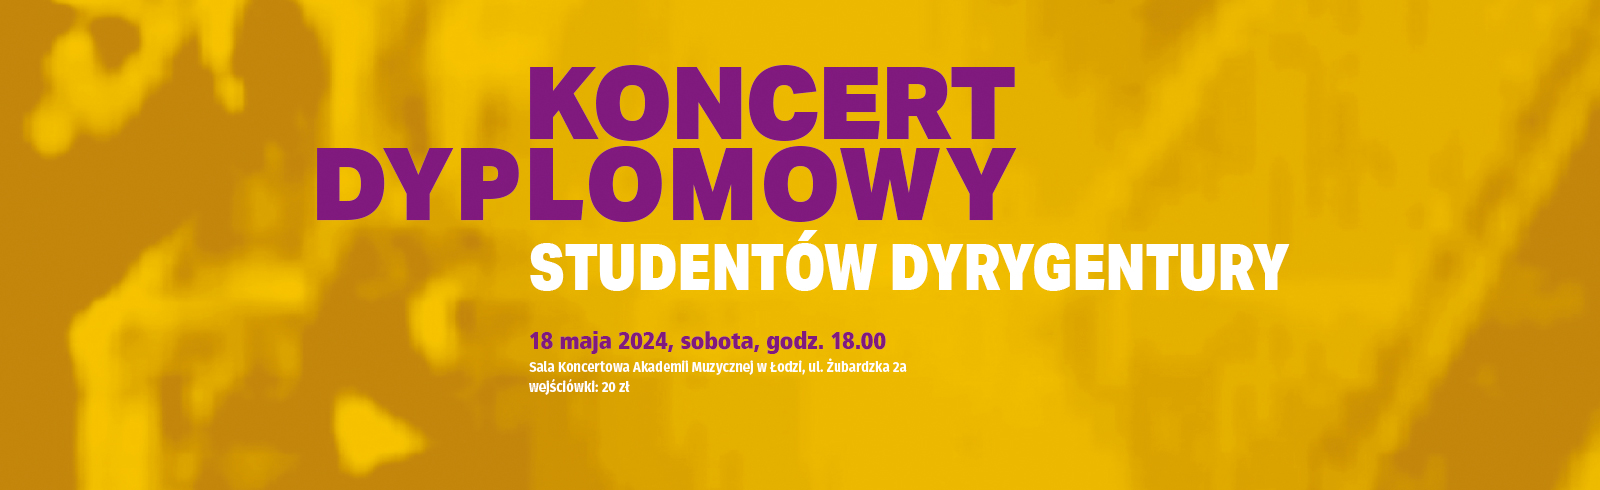 Koncert dyplomowy studentów dyrygentury 2024-05-18